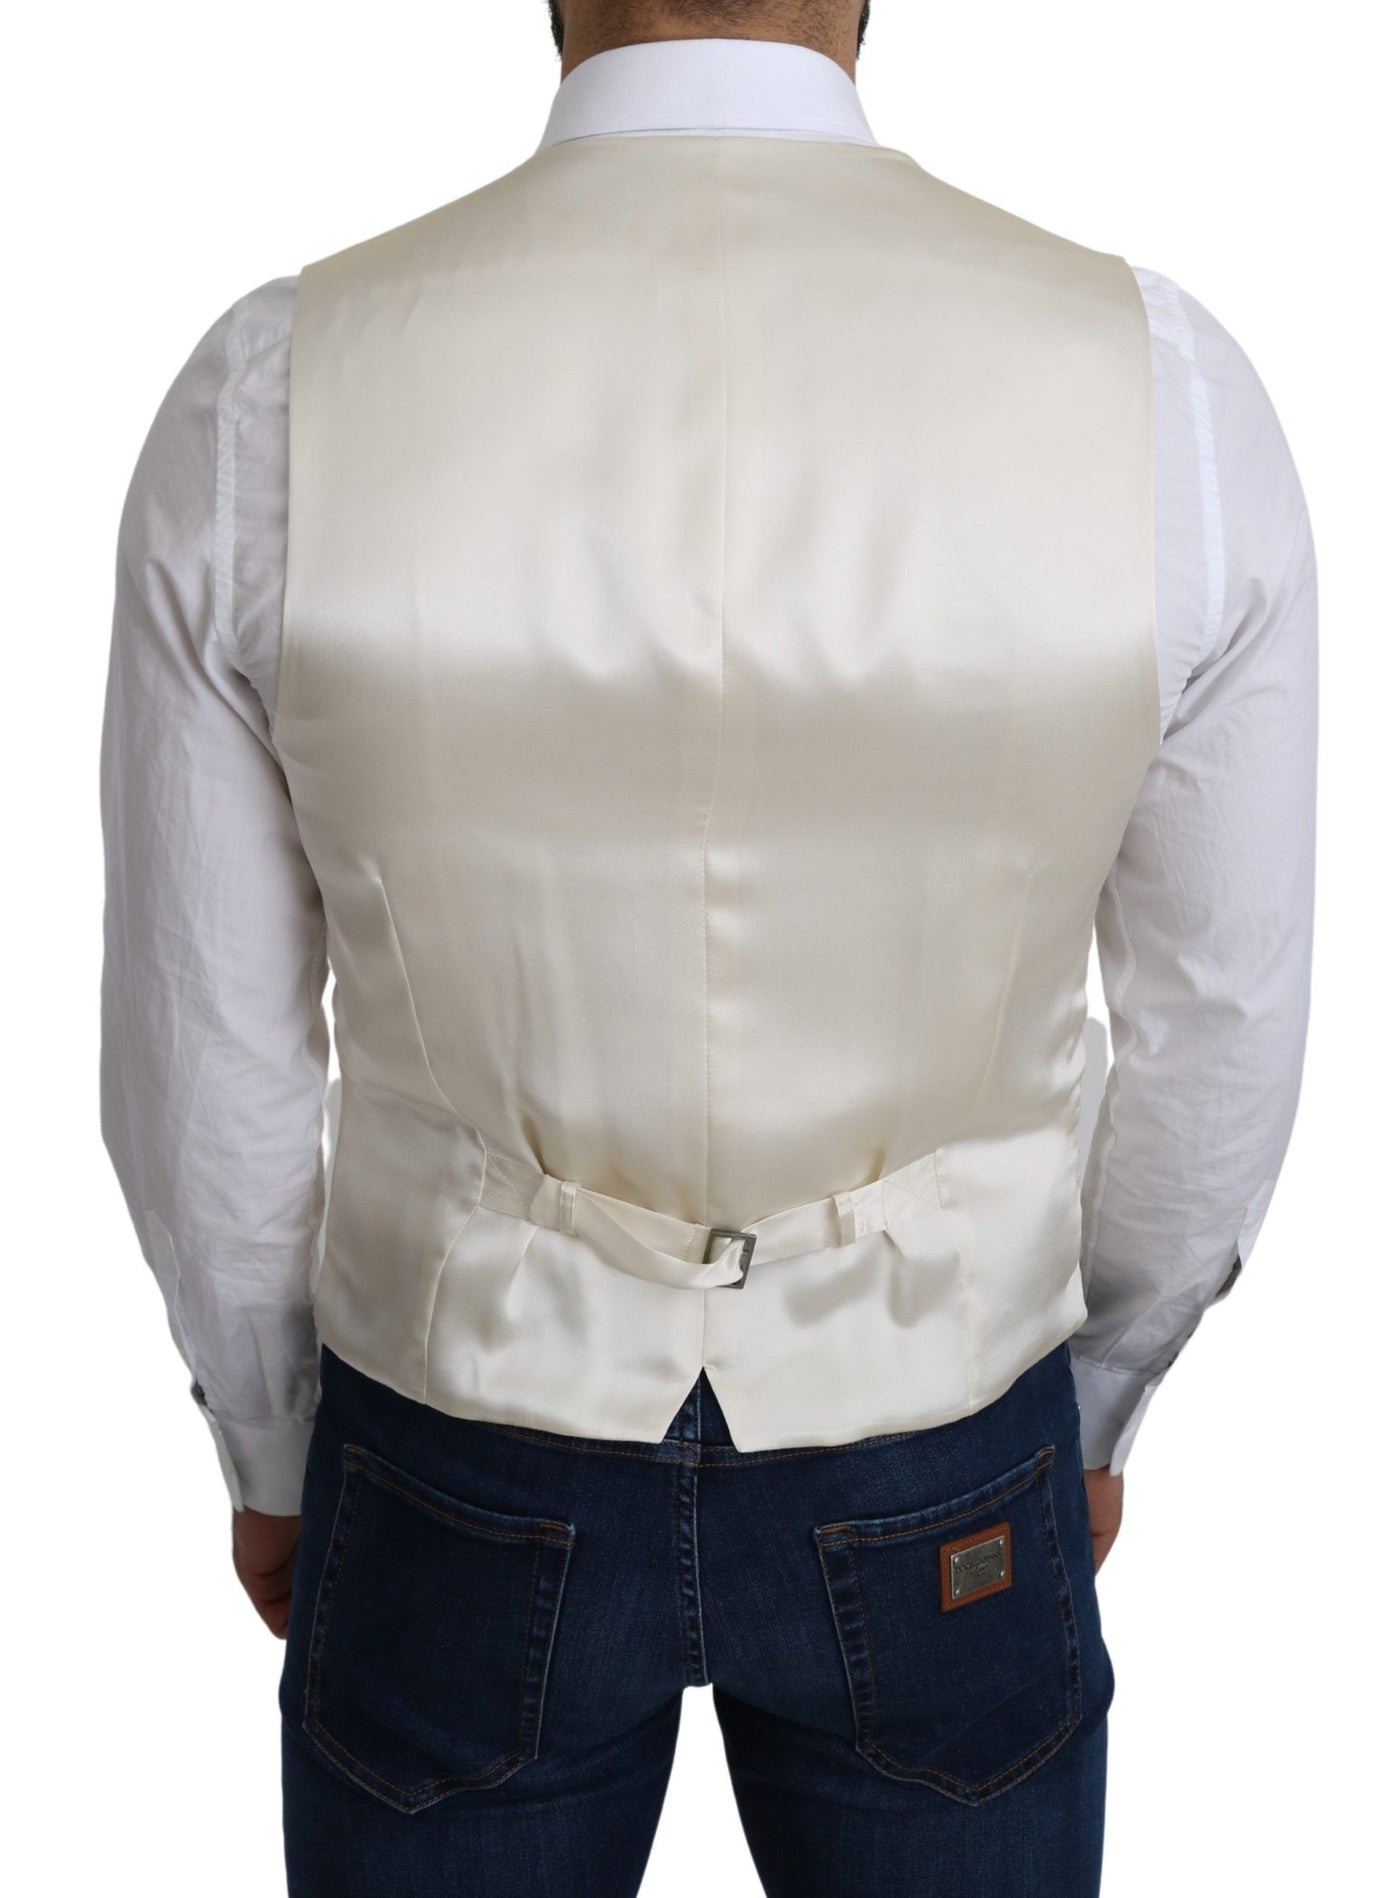 Dolce & Gabbana Off-White 100% Silk Formal Coat Vest